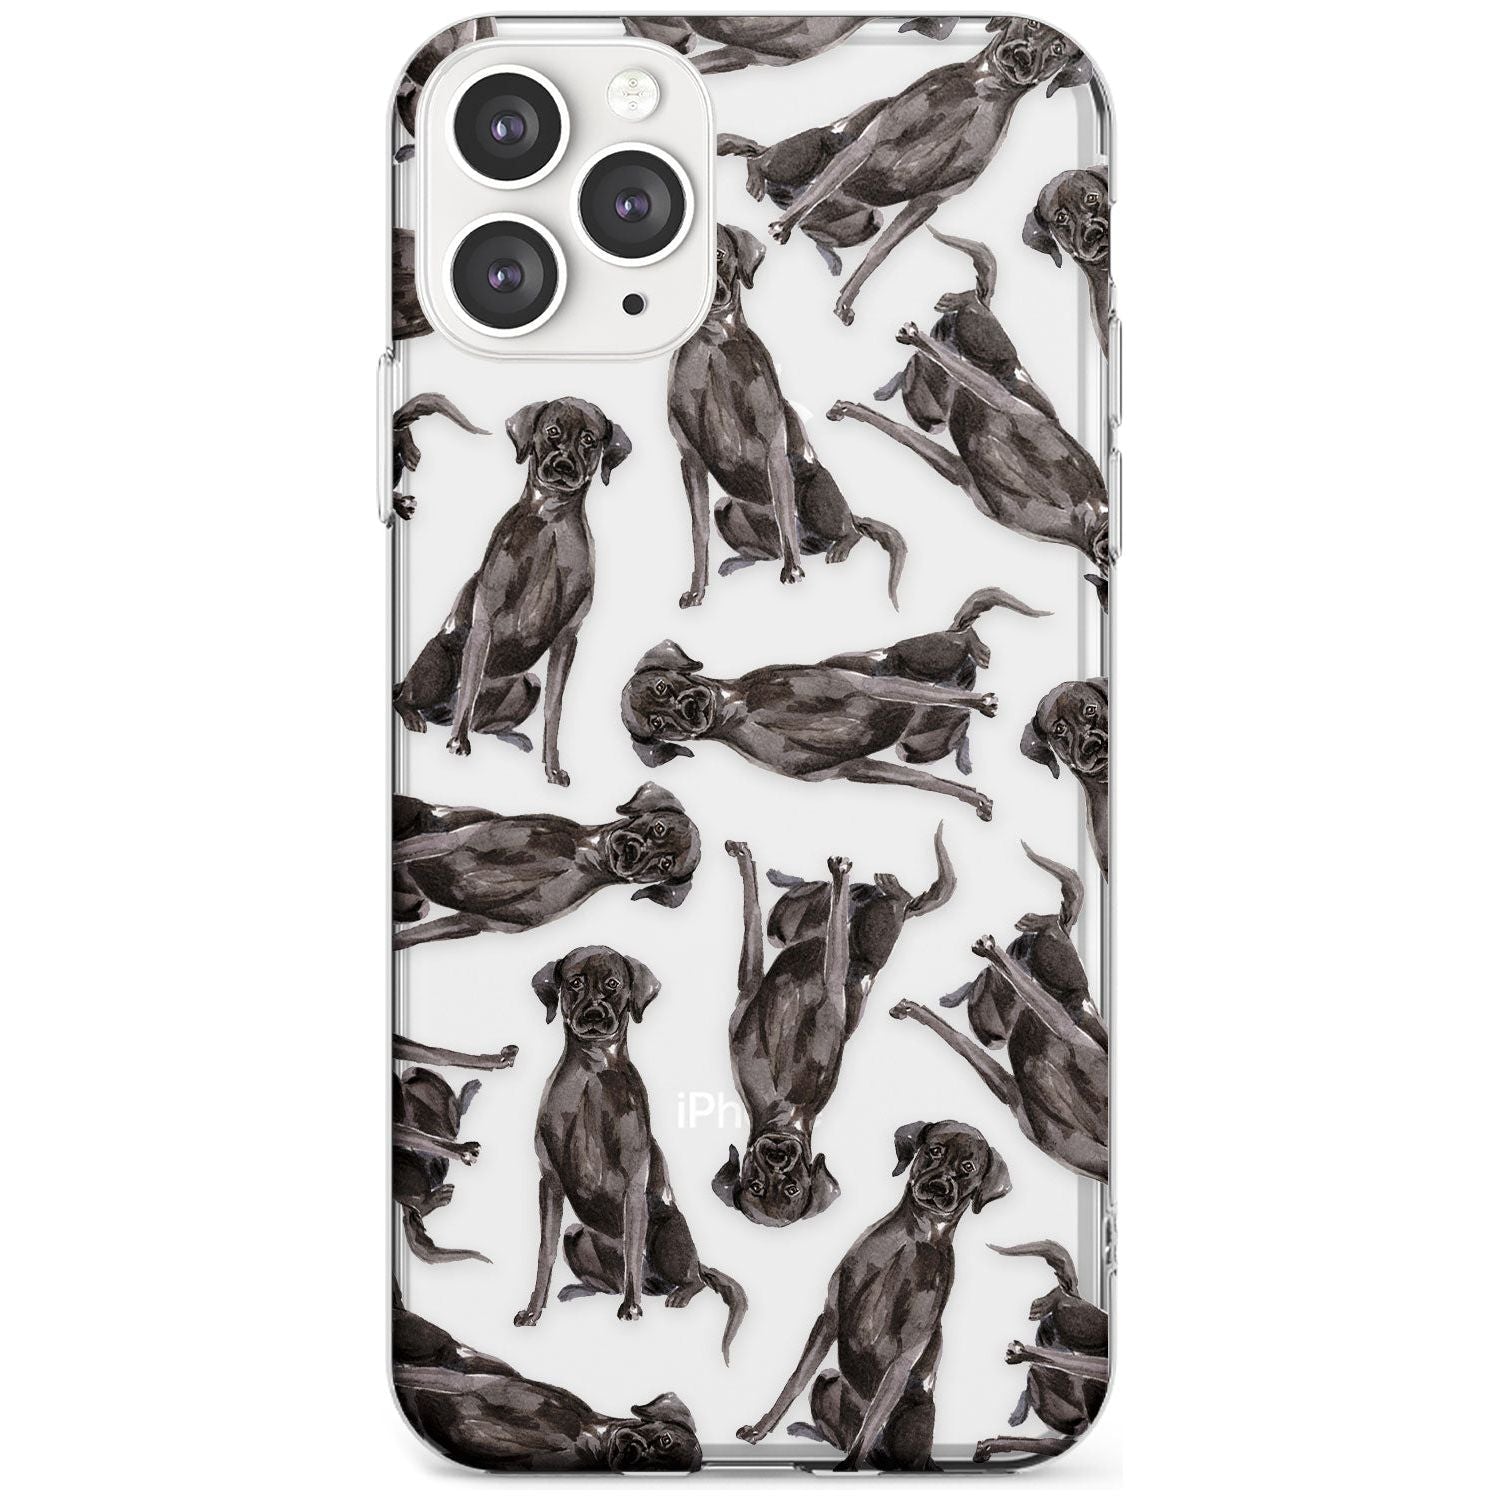 Black Labrador Watercolour Dog Pattern Slim TPU Phone Case for iPhone 11 Pro Max